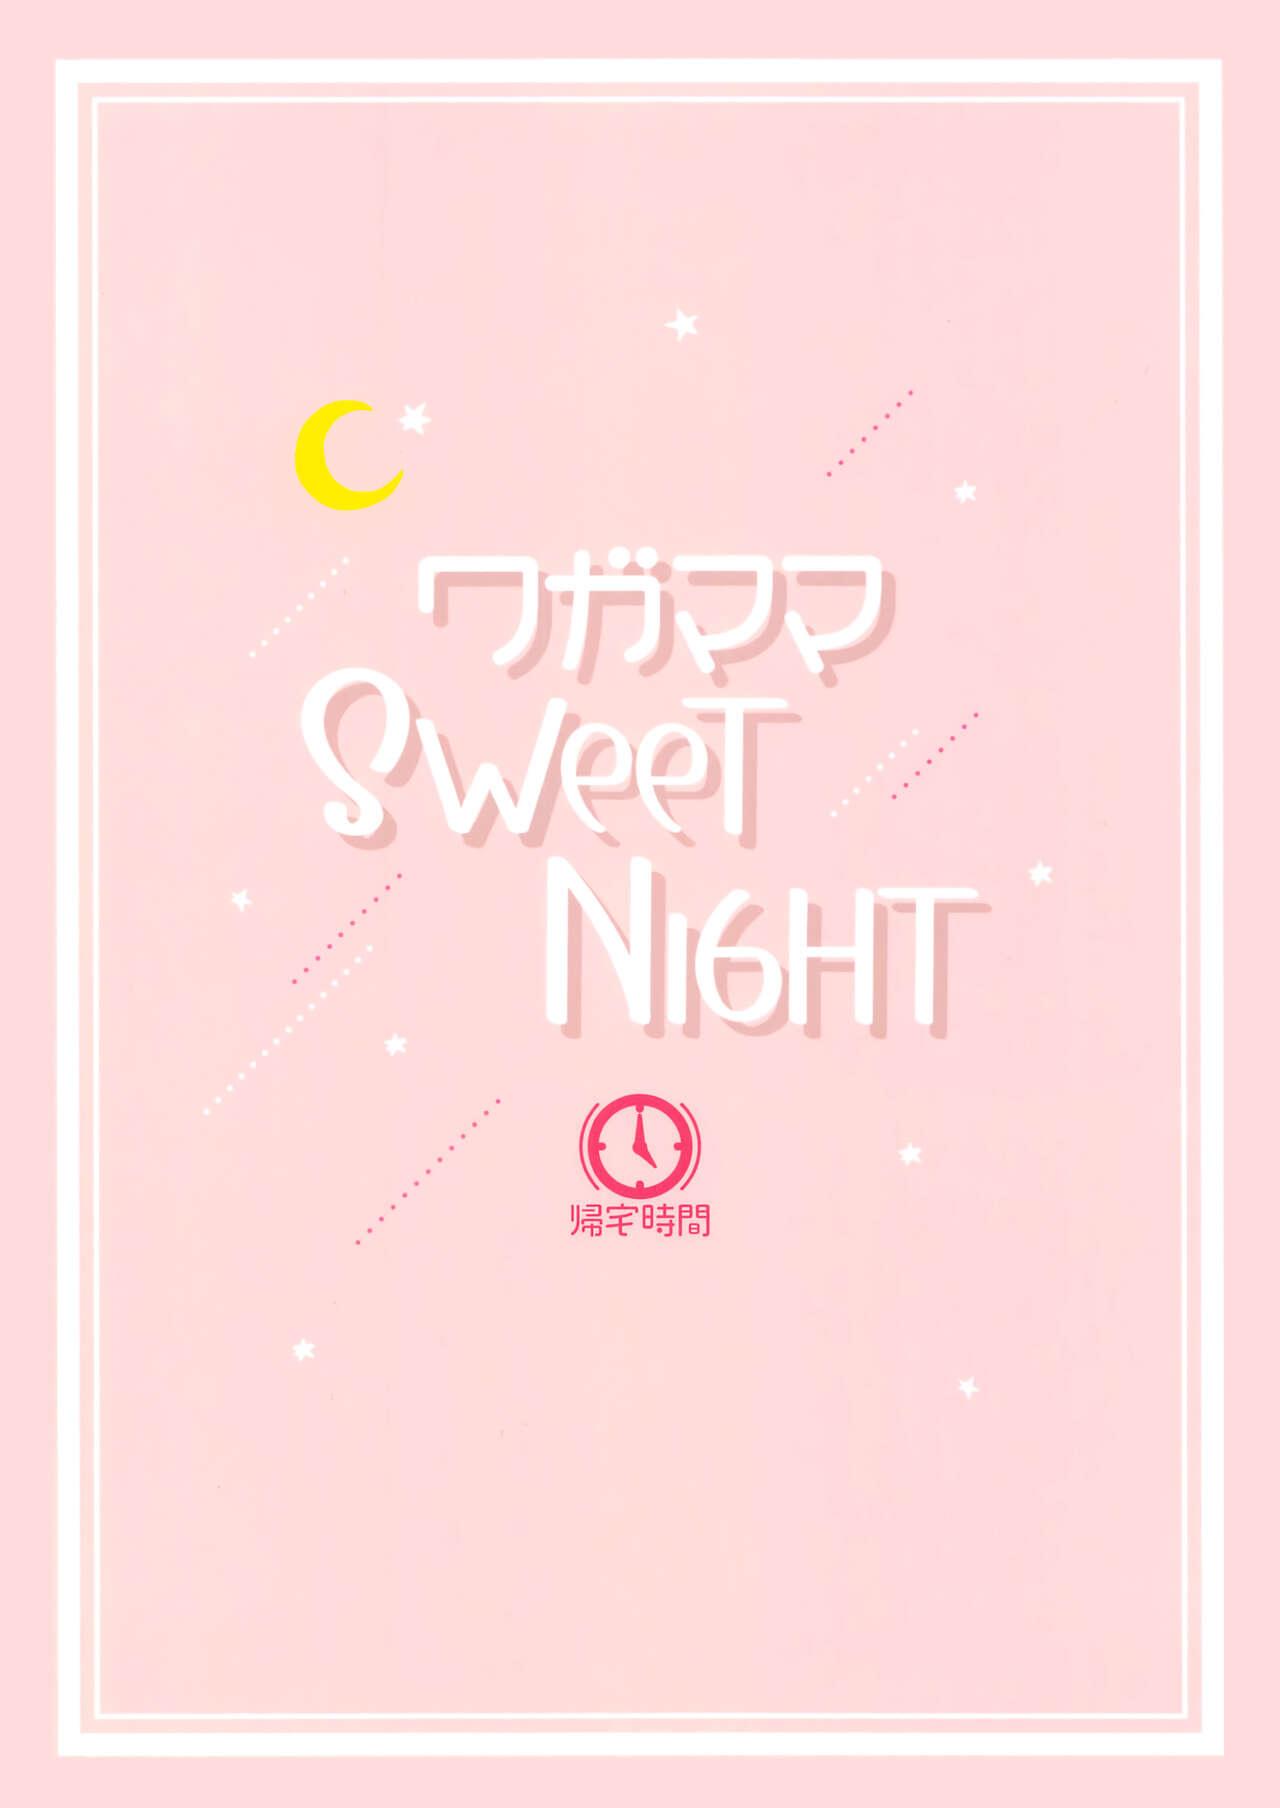 Wagamama SweetNight | Selfish Sweet Night 25